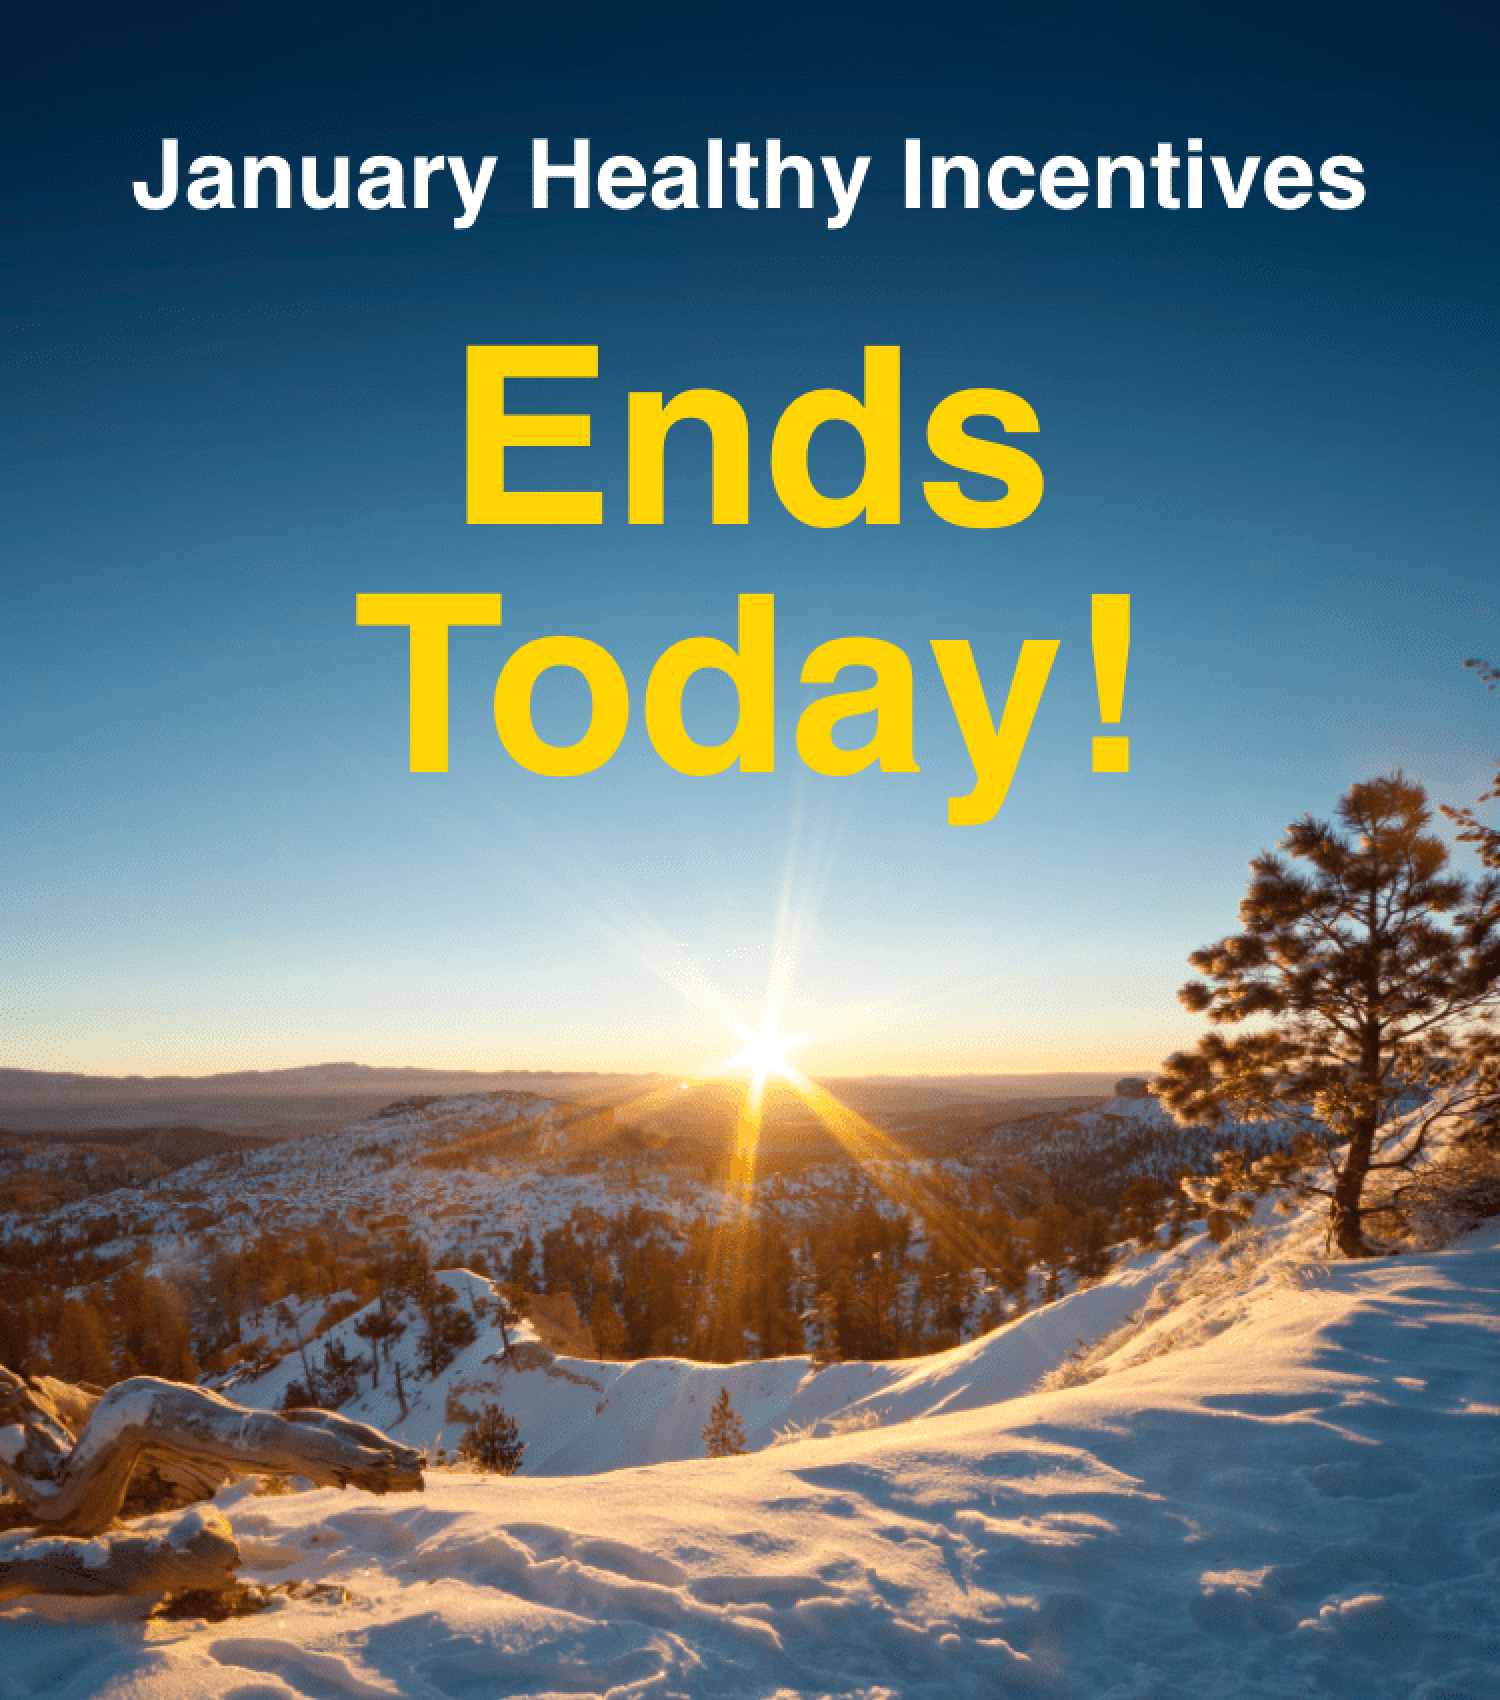 January Healthy Incentives